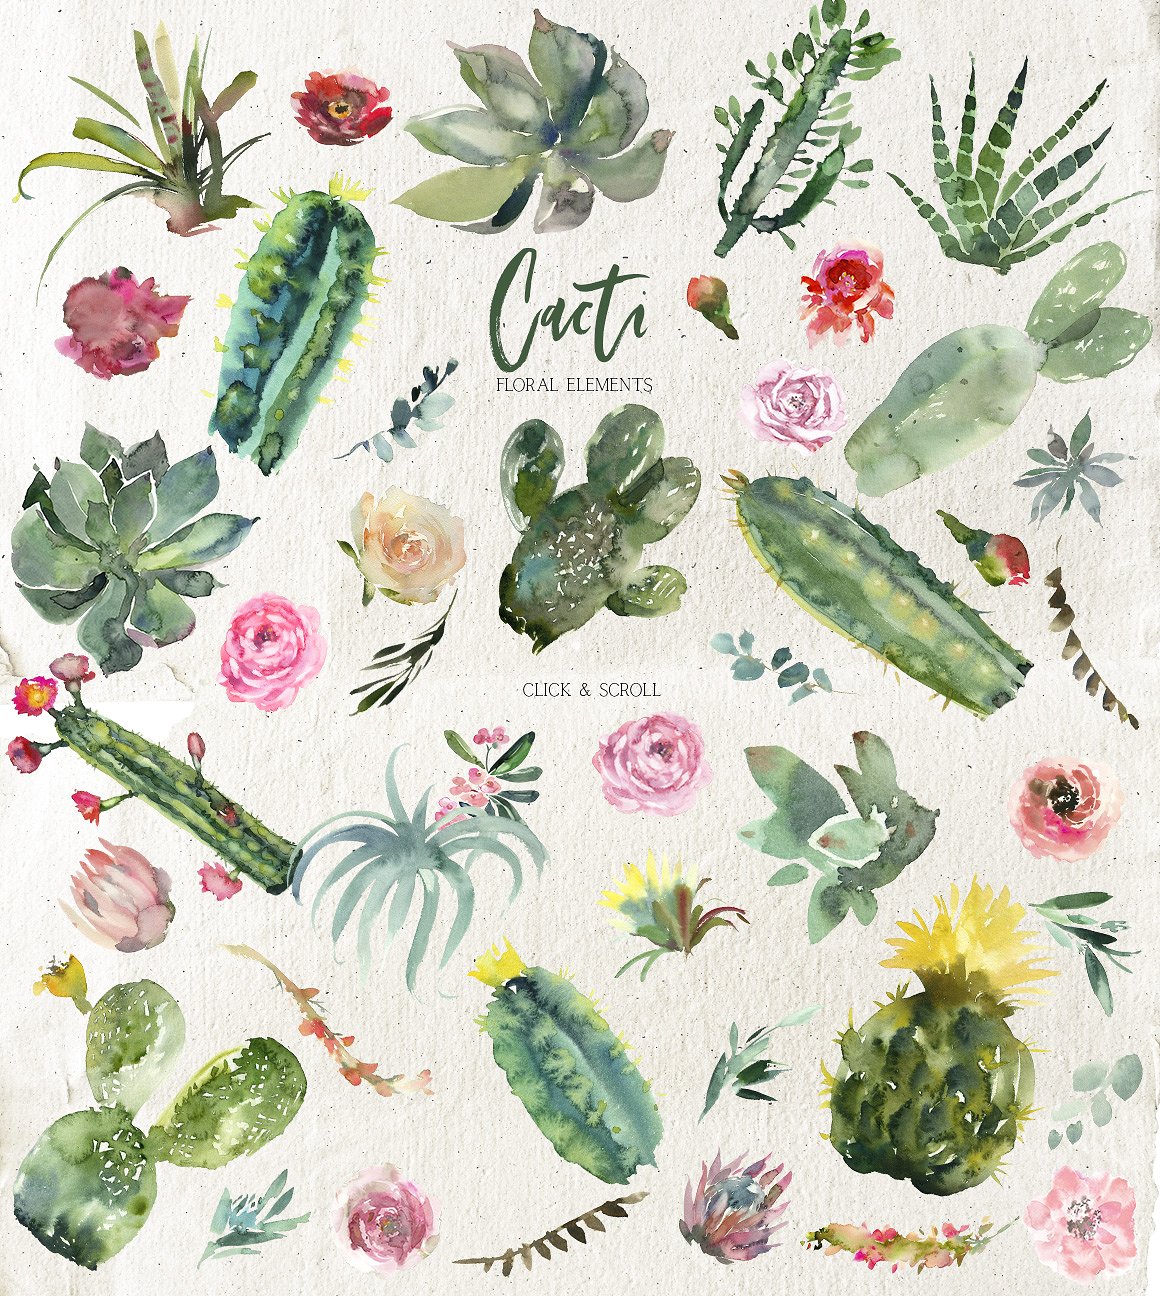 漂亮的手绘仙人掌多肉花卉PNG剪贴画集 Beautiful Hand-Painted Cactus Succulent Flower PNG Clip Art Set插图9